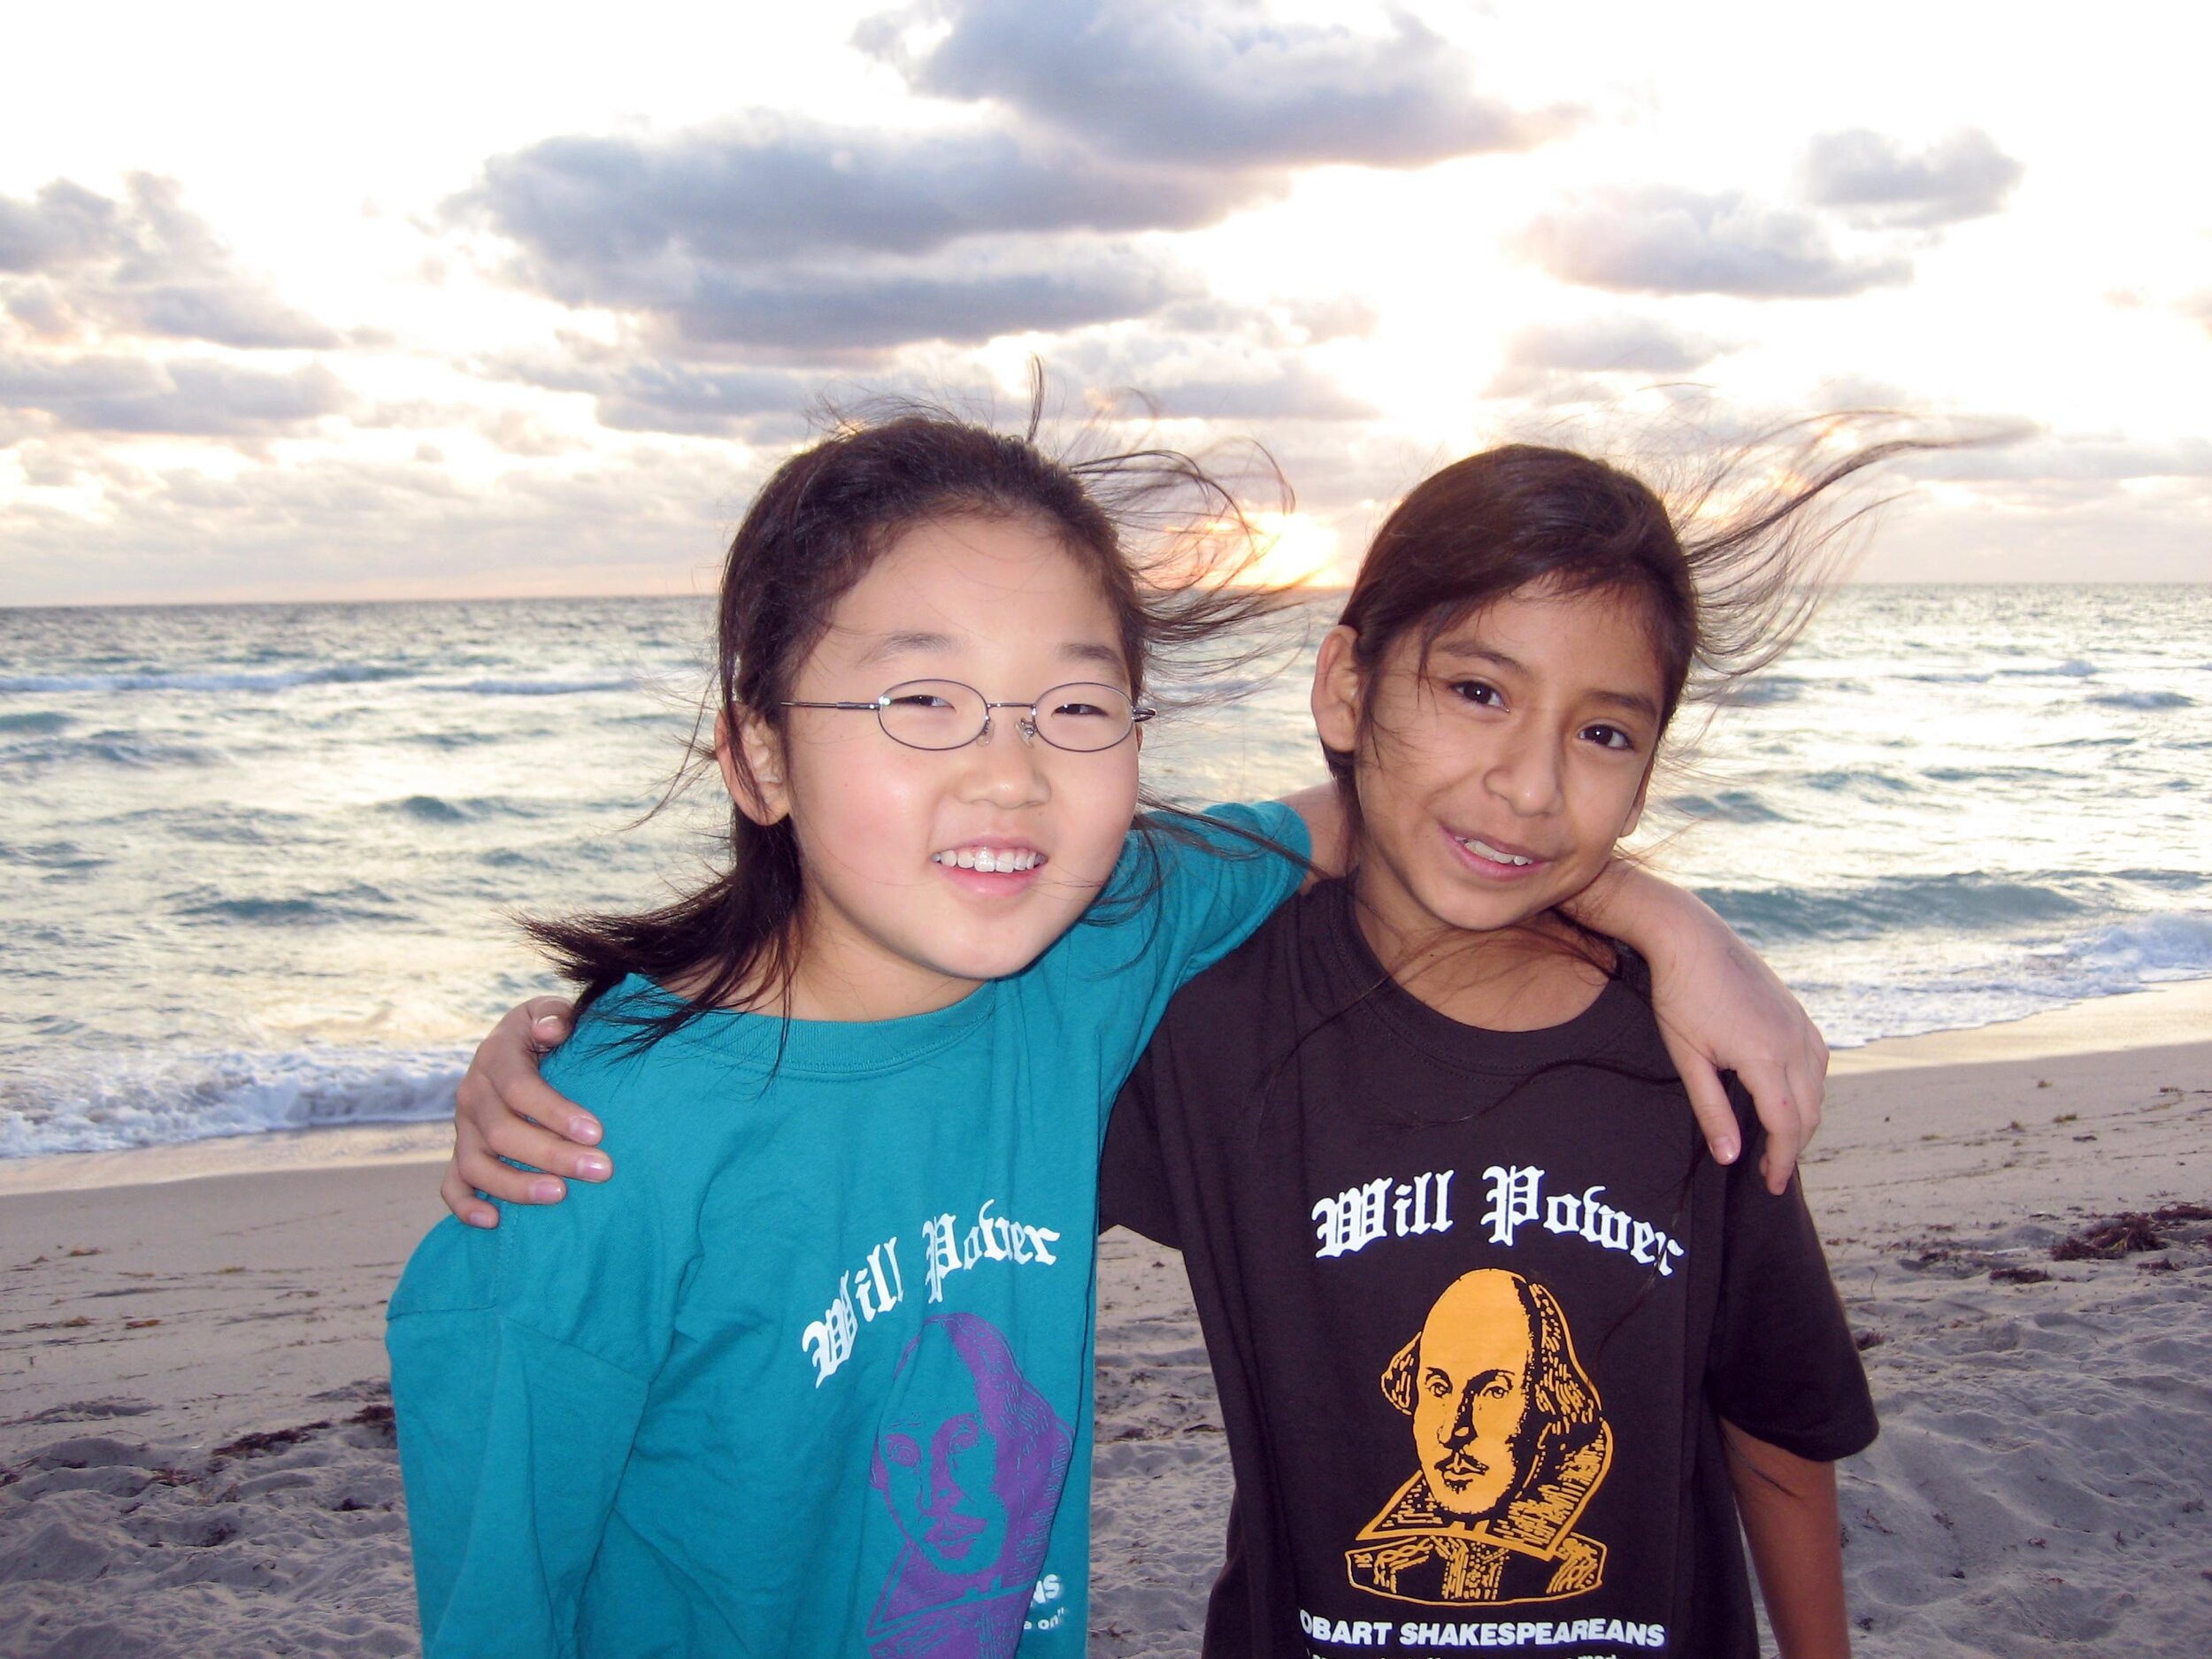  Ye Rim and Jessica  Miami Beach 